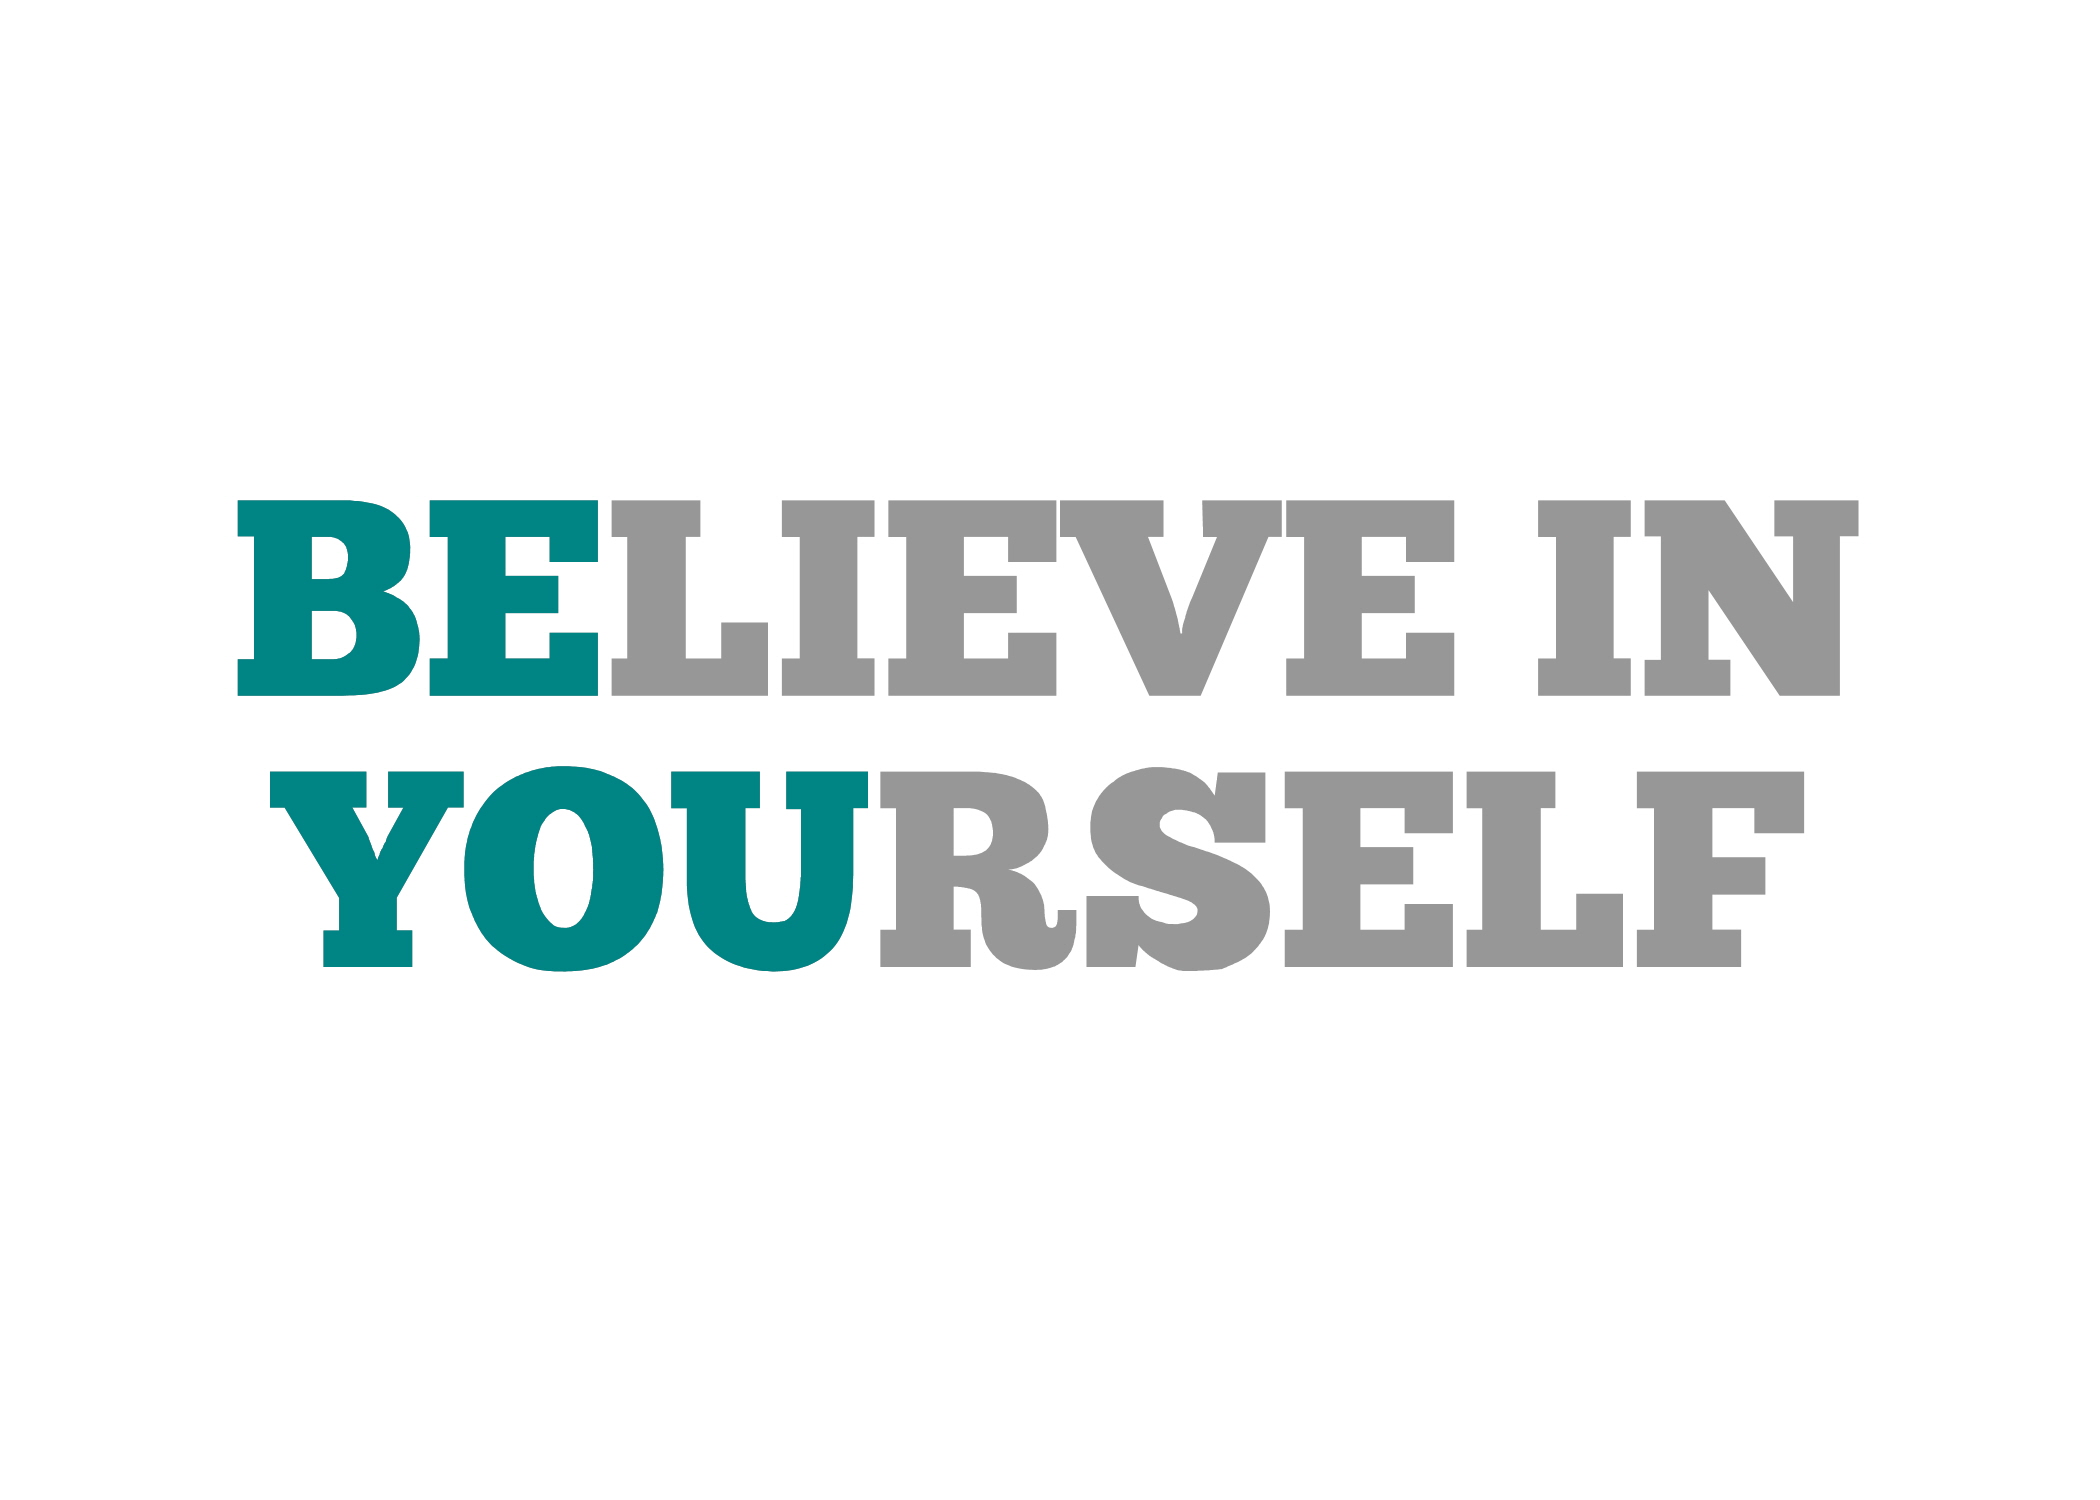 Because we believe. Believe in. Картинка belive in yur Salf. Believe in yourself картинки. Обои believe in yourself.